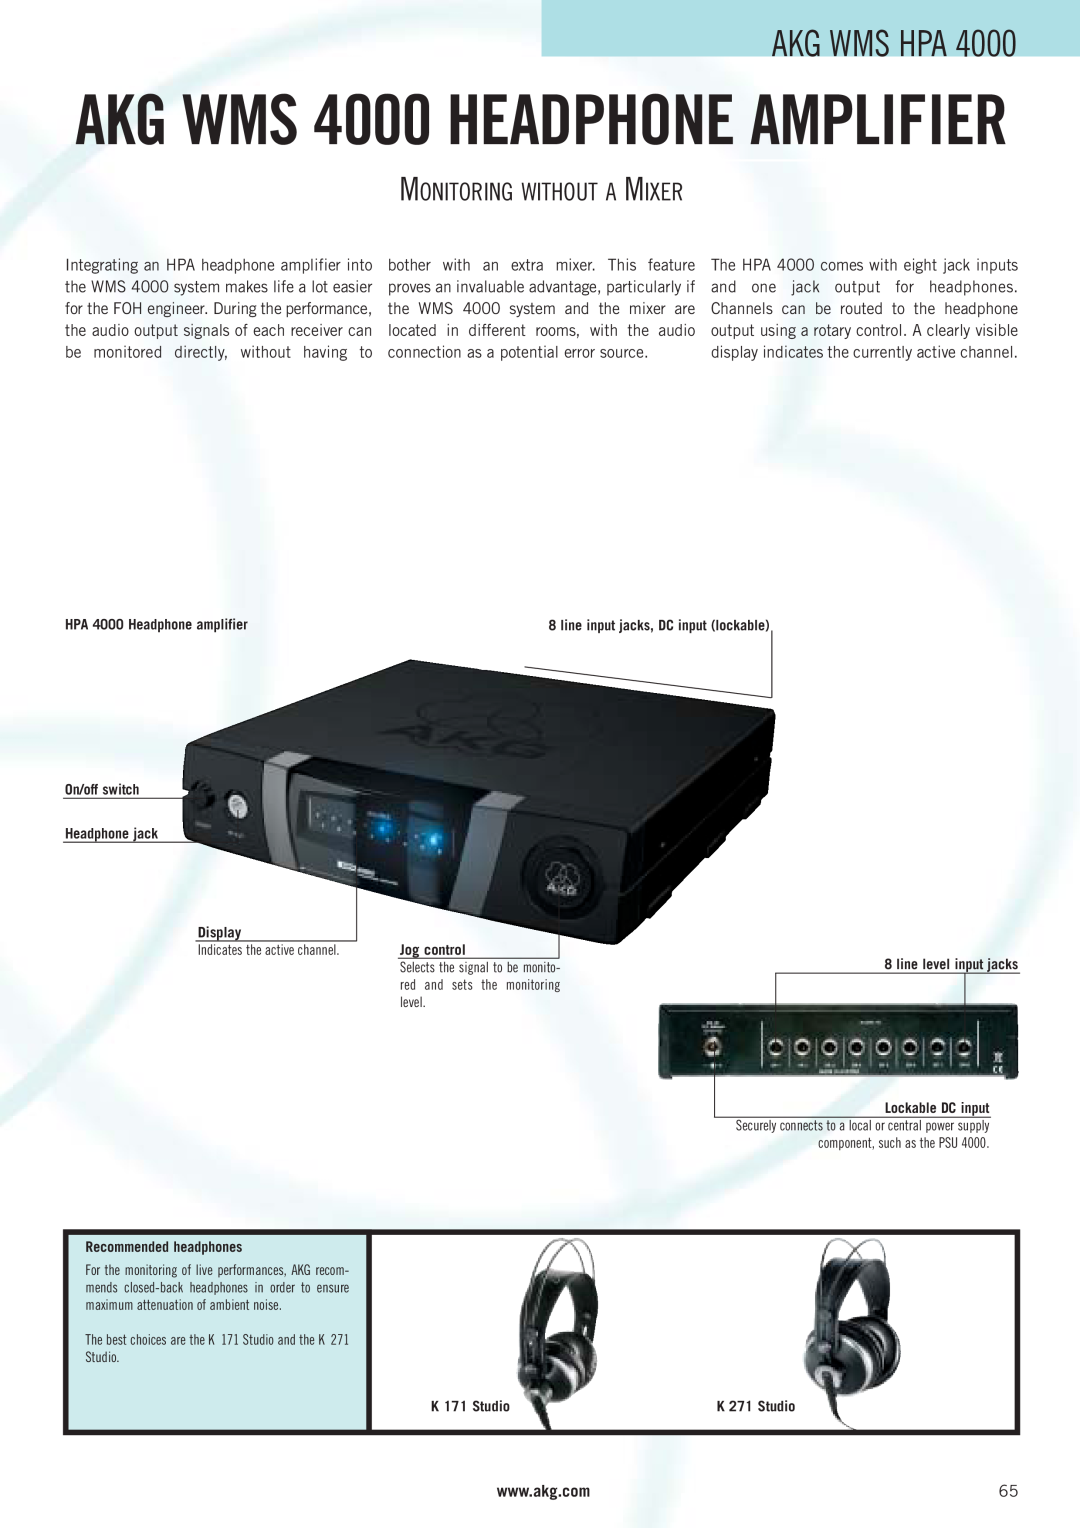 AKG Acoustics manual AKG WMS 4000 HEADPHONE AMPLIFIER, Akg Wms Hpa, Monitoring Without A Mixer, Lockable DC input 